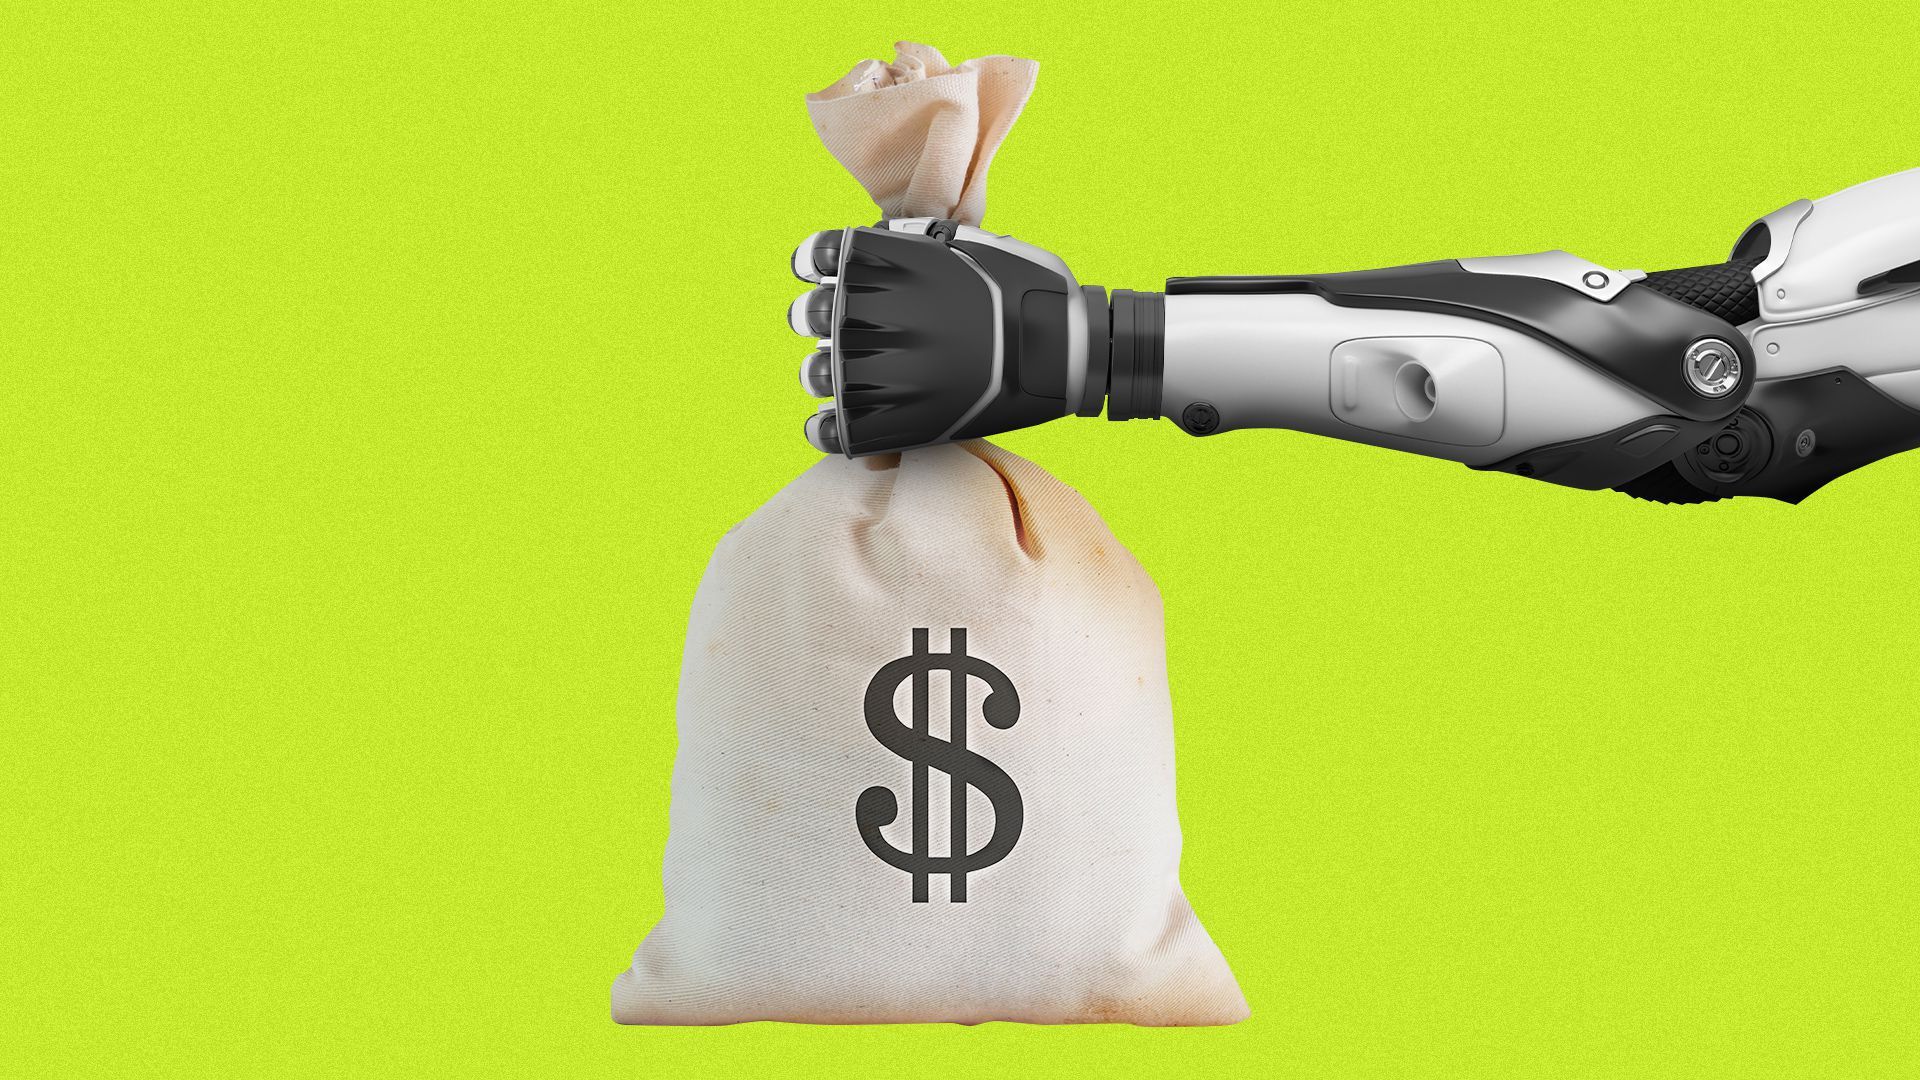 A robotic arm holding a bag of money